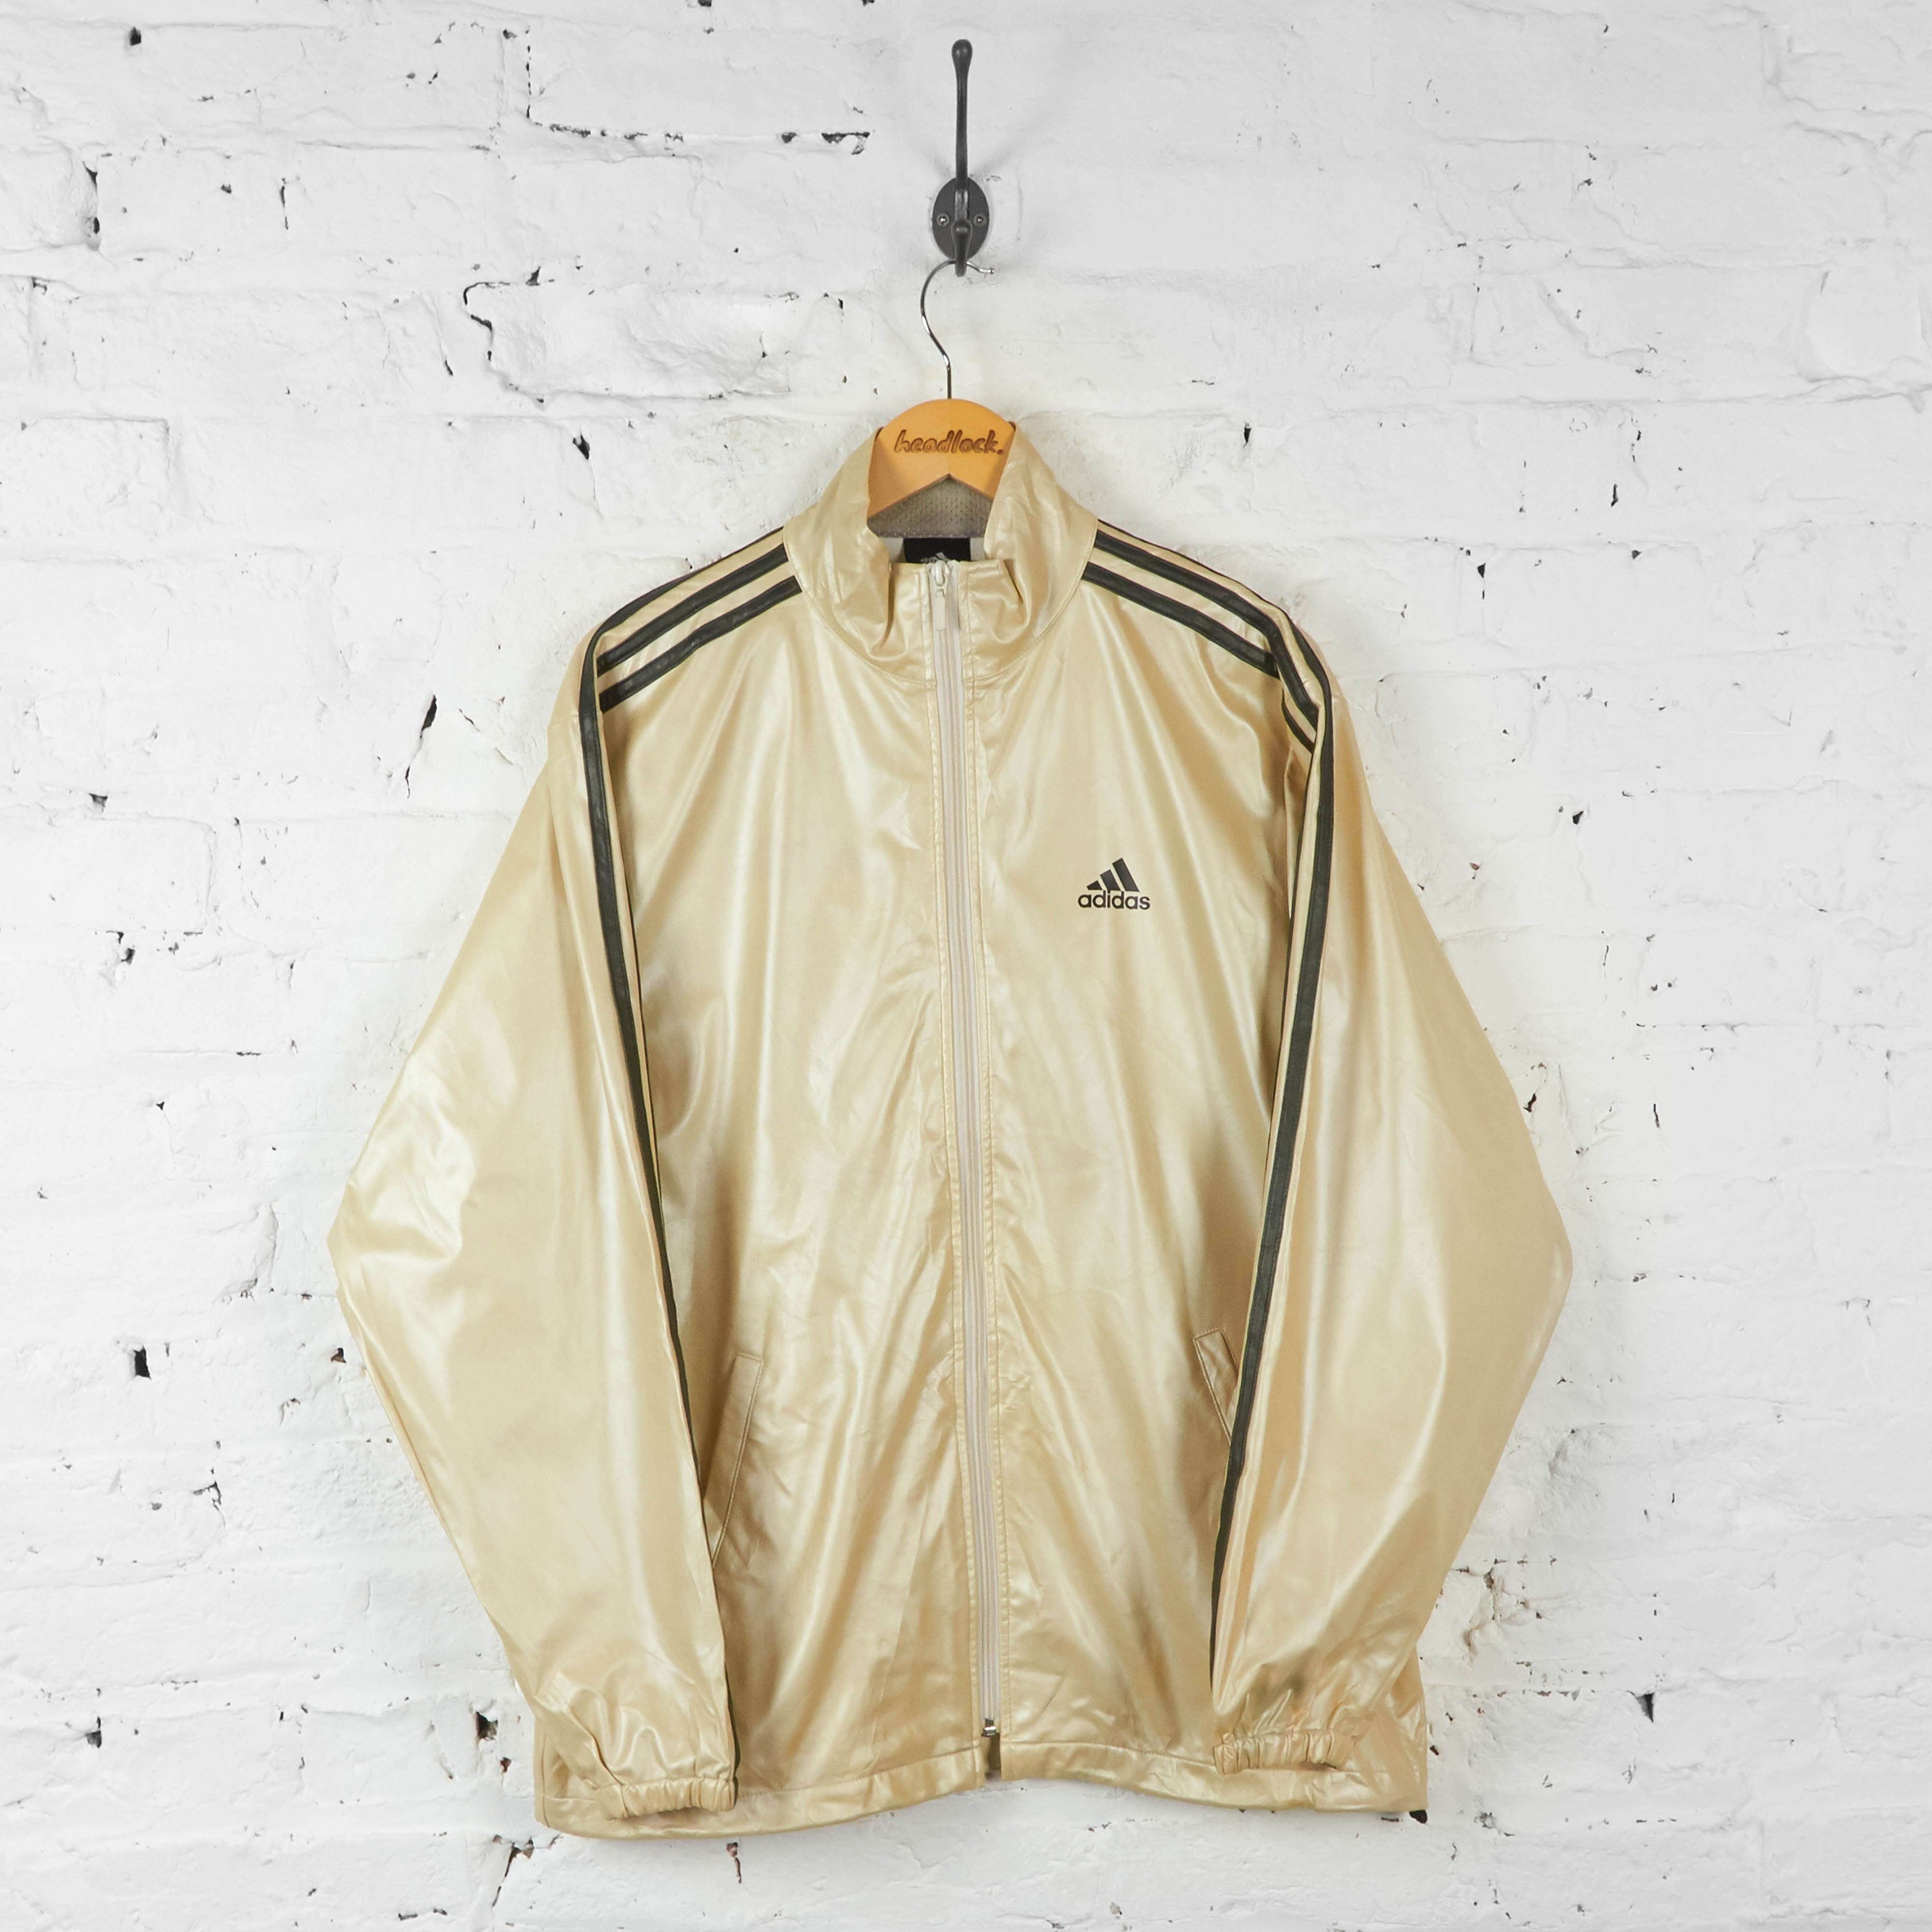 Adidas Tracksuit Top Jacket - Gold - L – Headlock